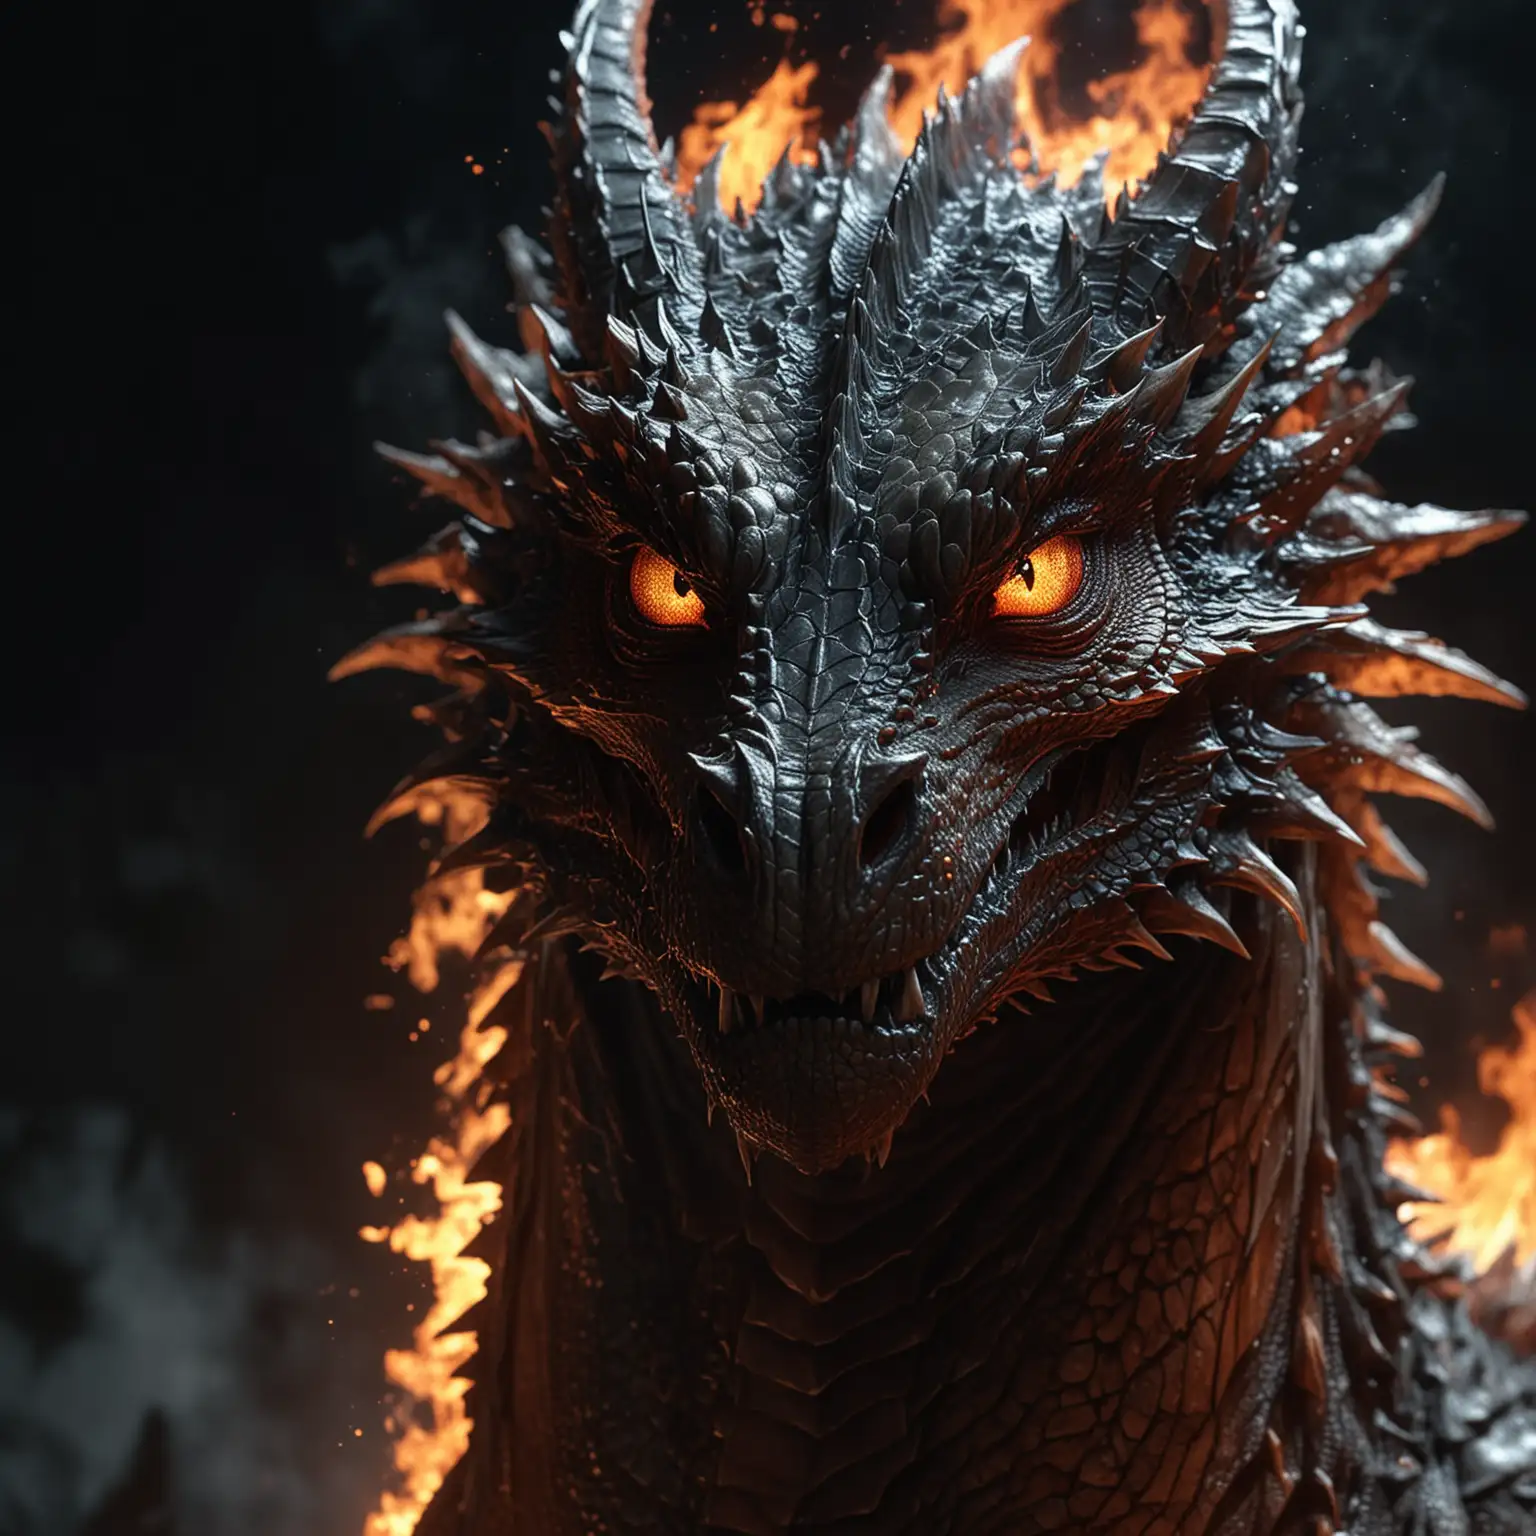 Captivating Fire Dragon Portrait in 8K Ultra HD Under Moonlight